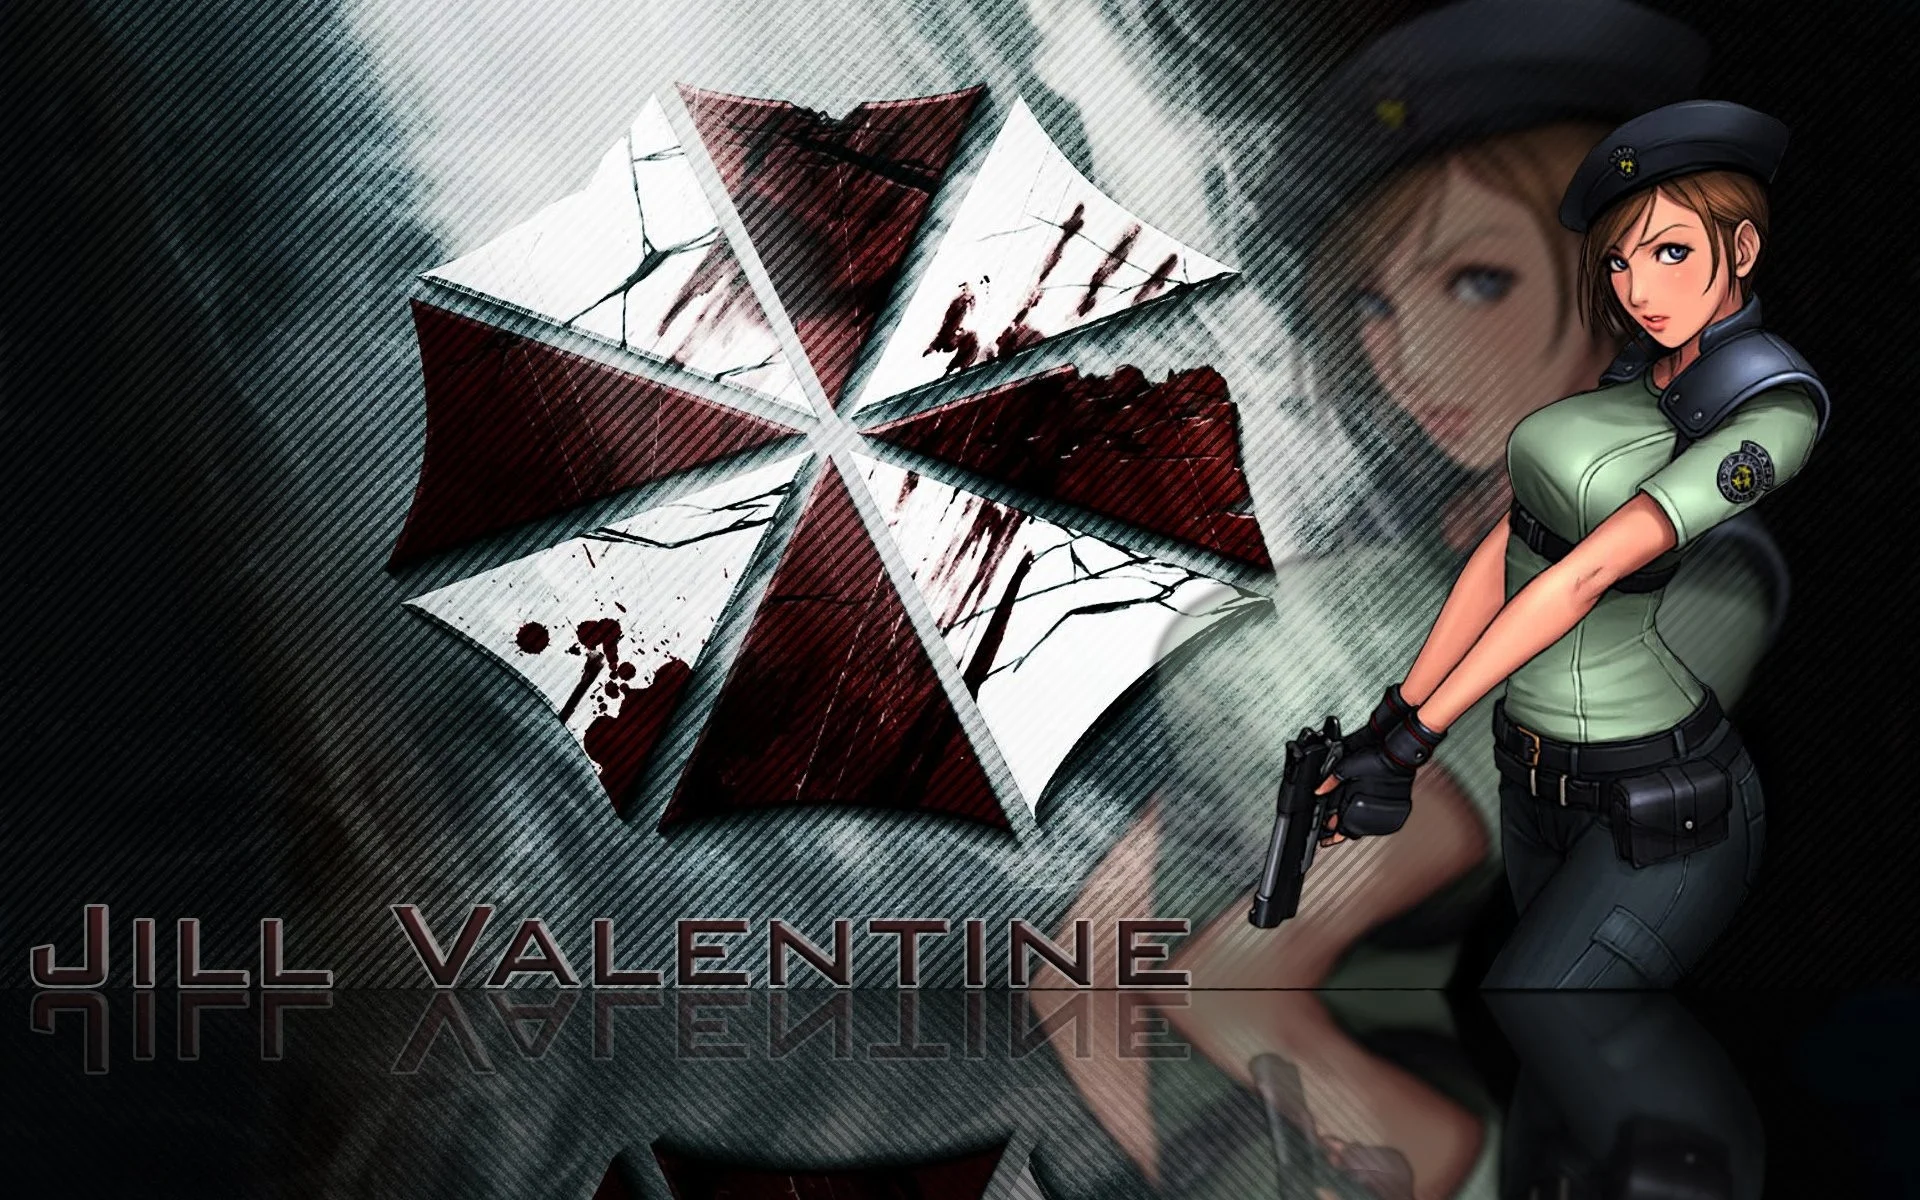 Jill Valentine Resident Evil 5 696256